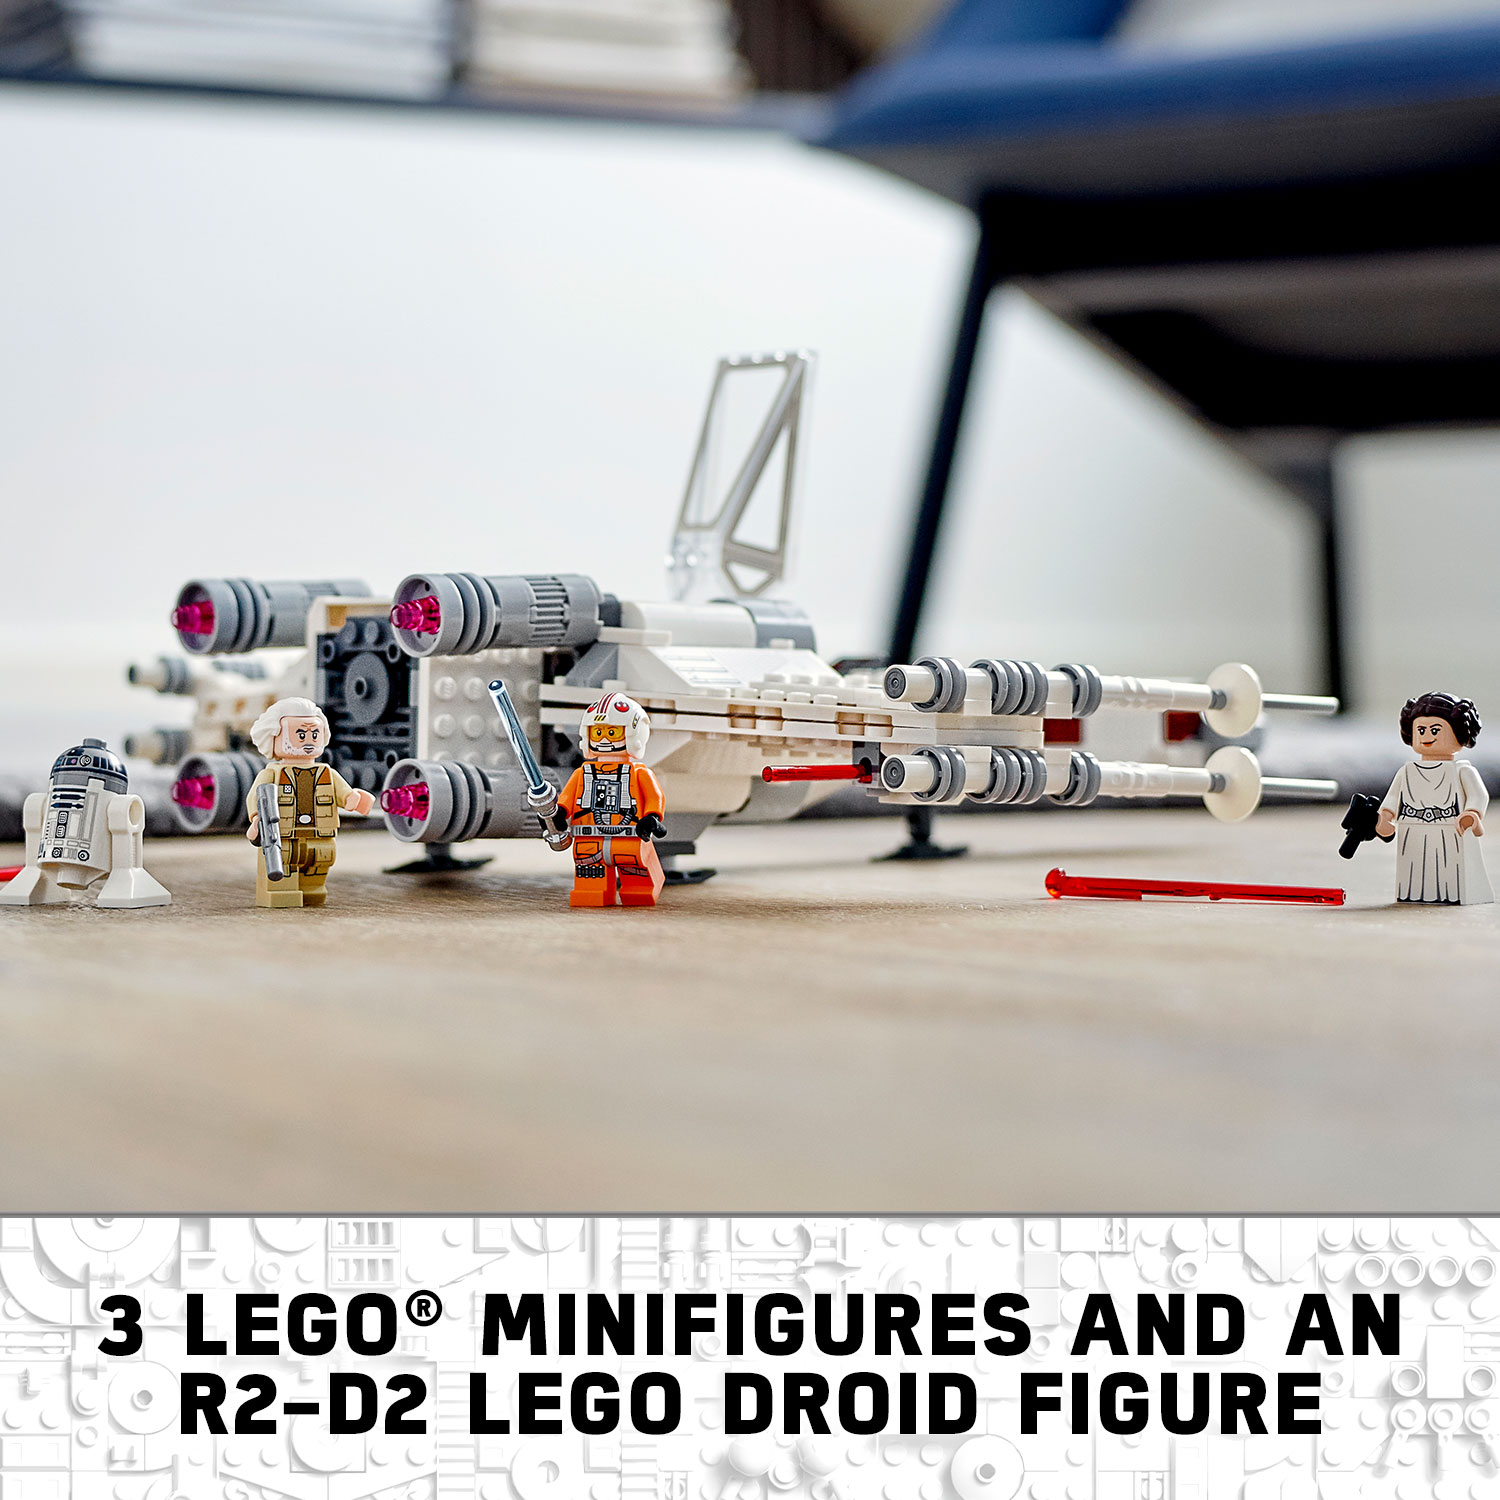 LEGO Star Wars 75301 Phi Thuyền Chiến Đấu X-Wing Fighter Của Luke Skywalker (474 chi tiết)